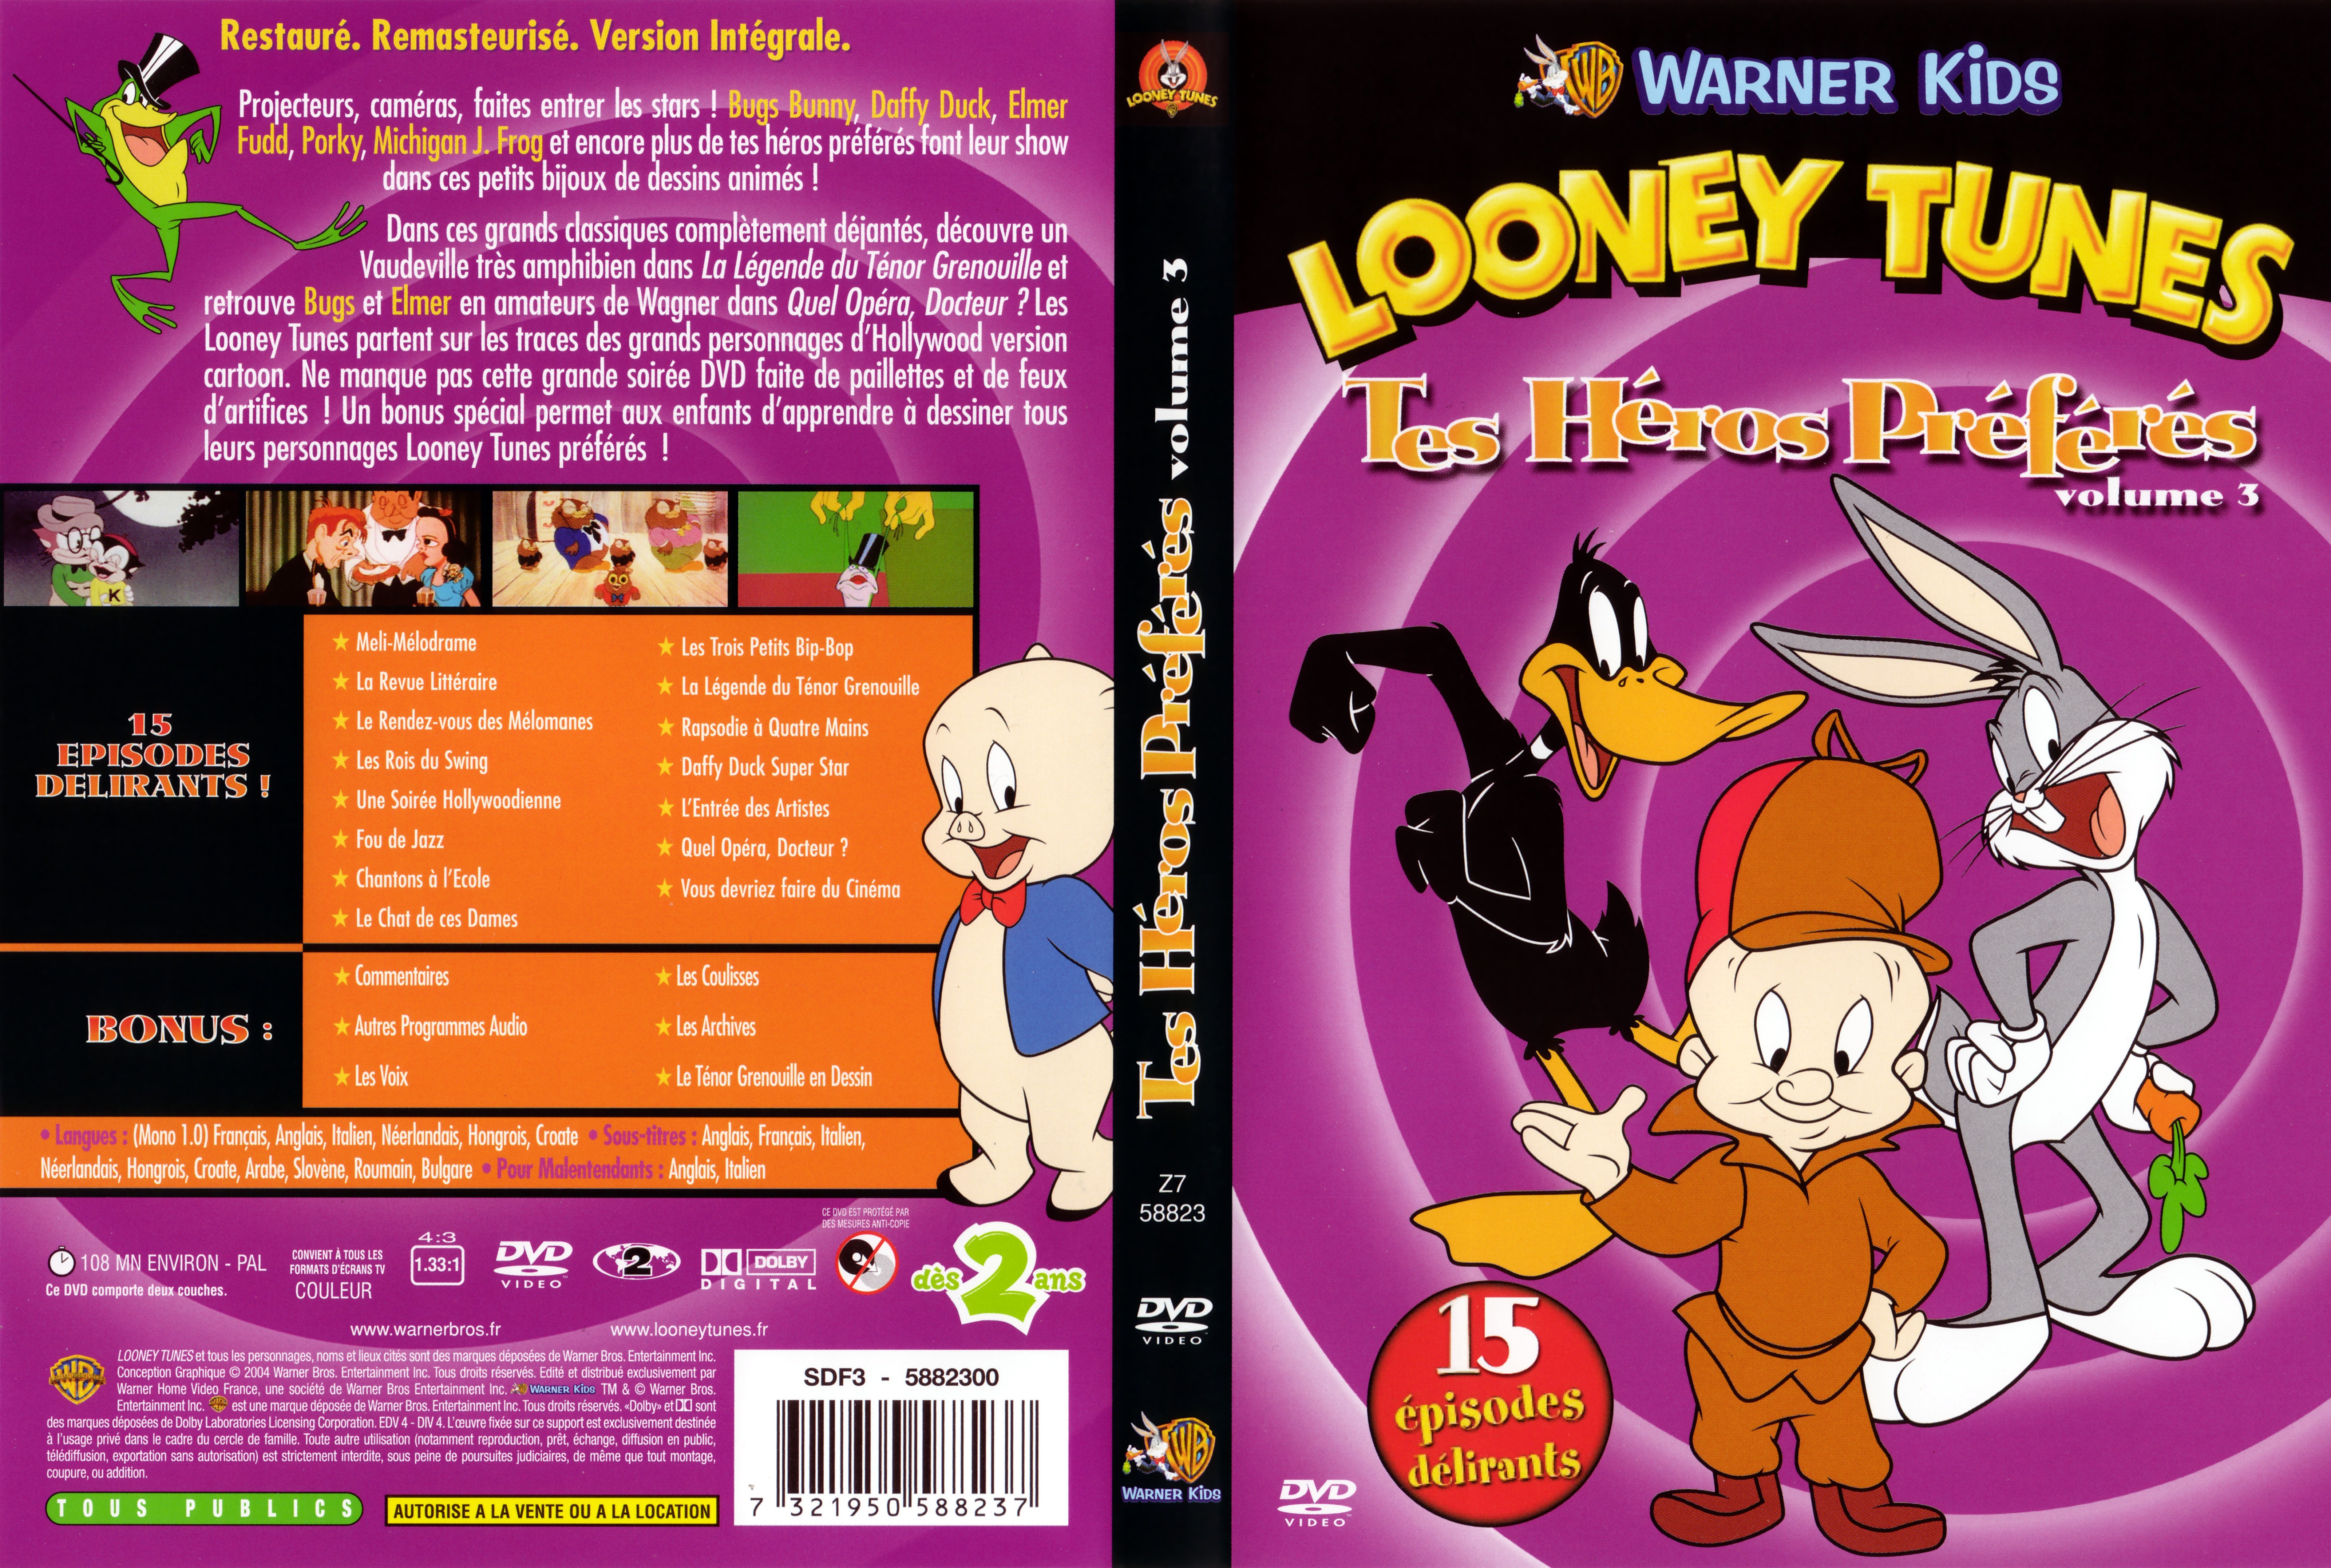 Jaquette DVD Looney tunes - Tes hros prfrs vol 3